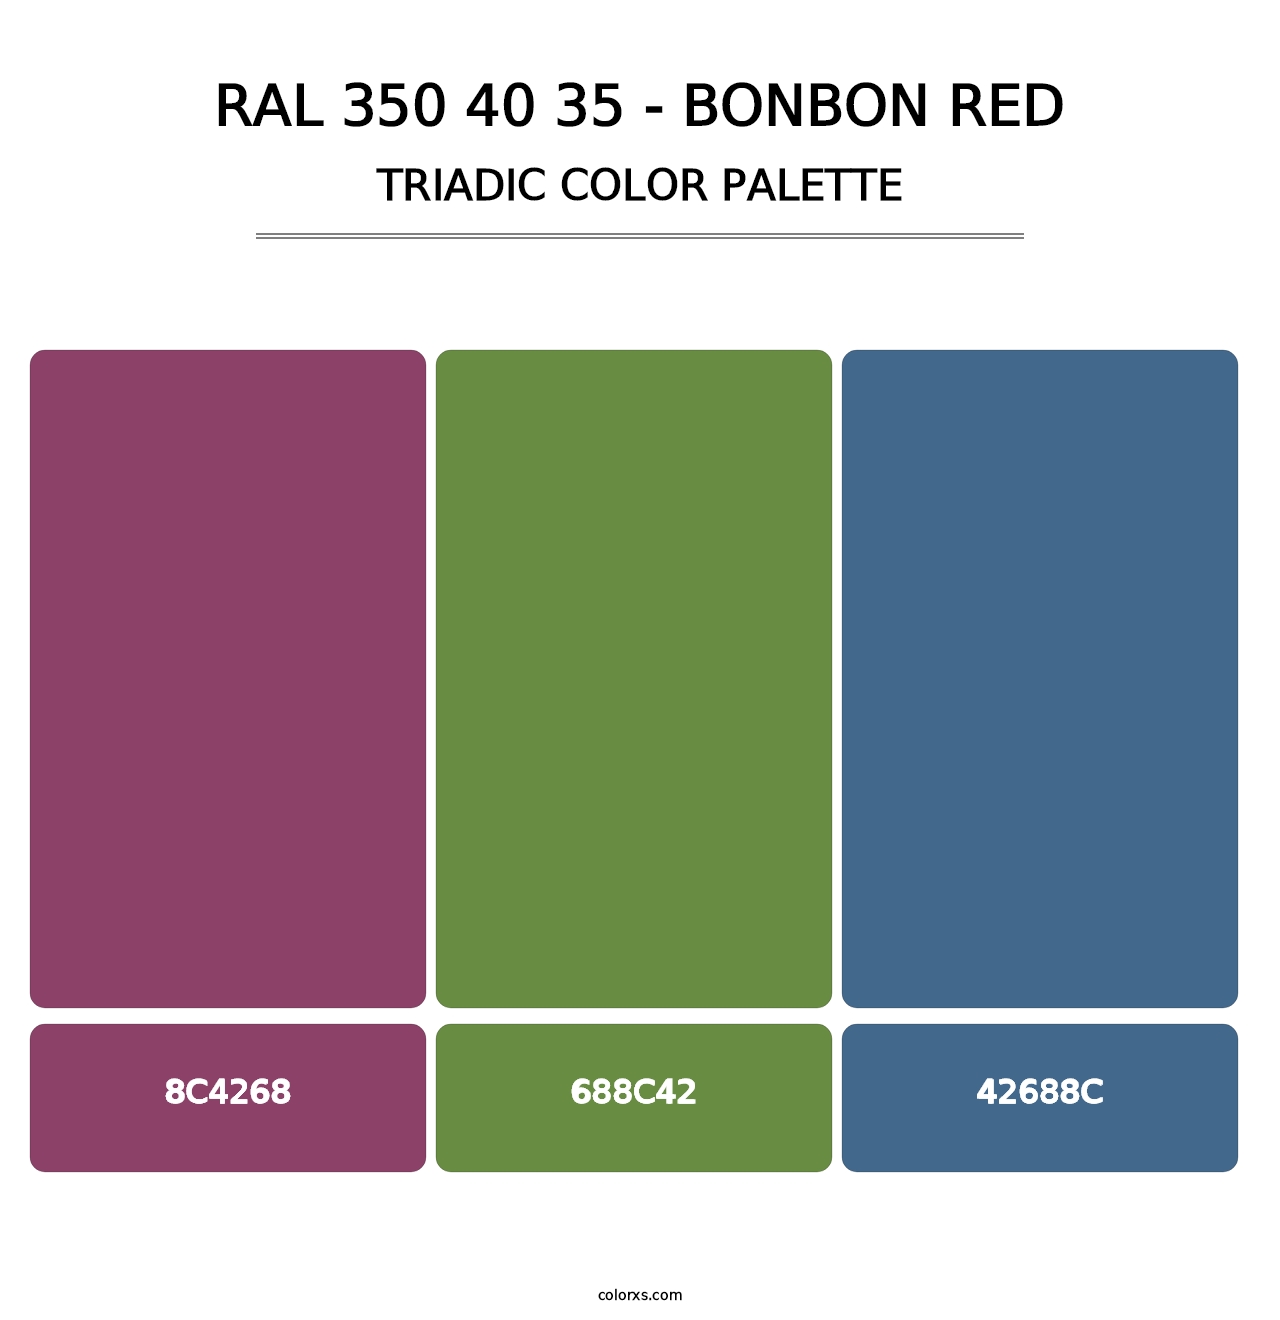 RAL 350 40 35 - Bonbon Red - Triadic Color Palette